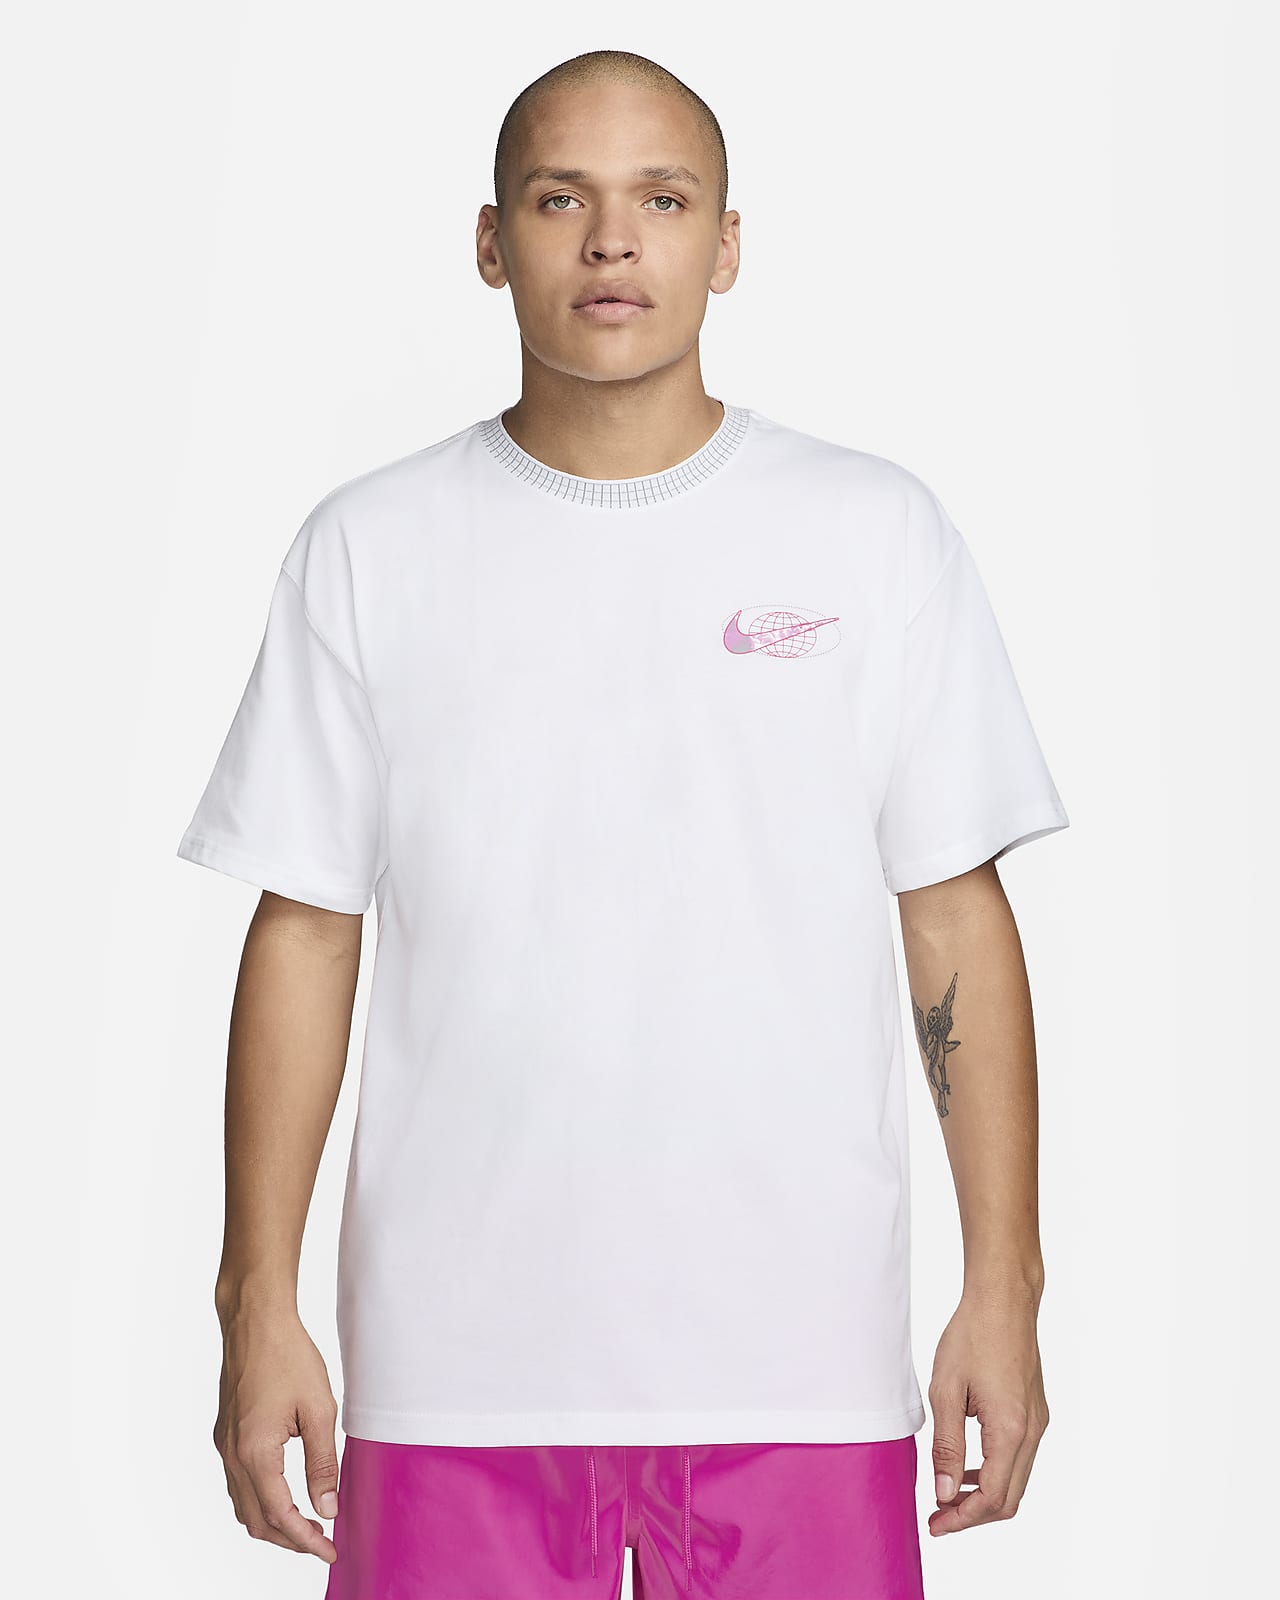 Nike Sportswear Men's Max90 T-Shirt - White